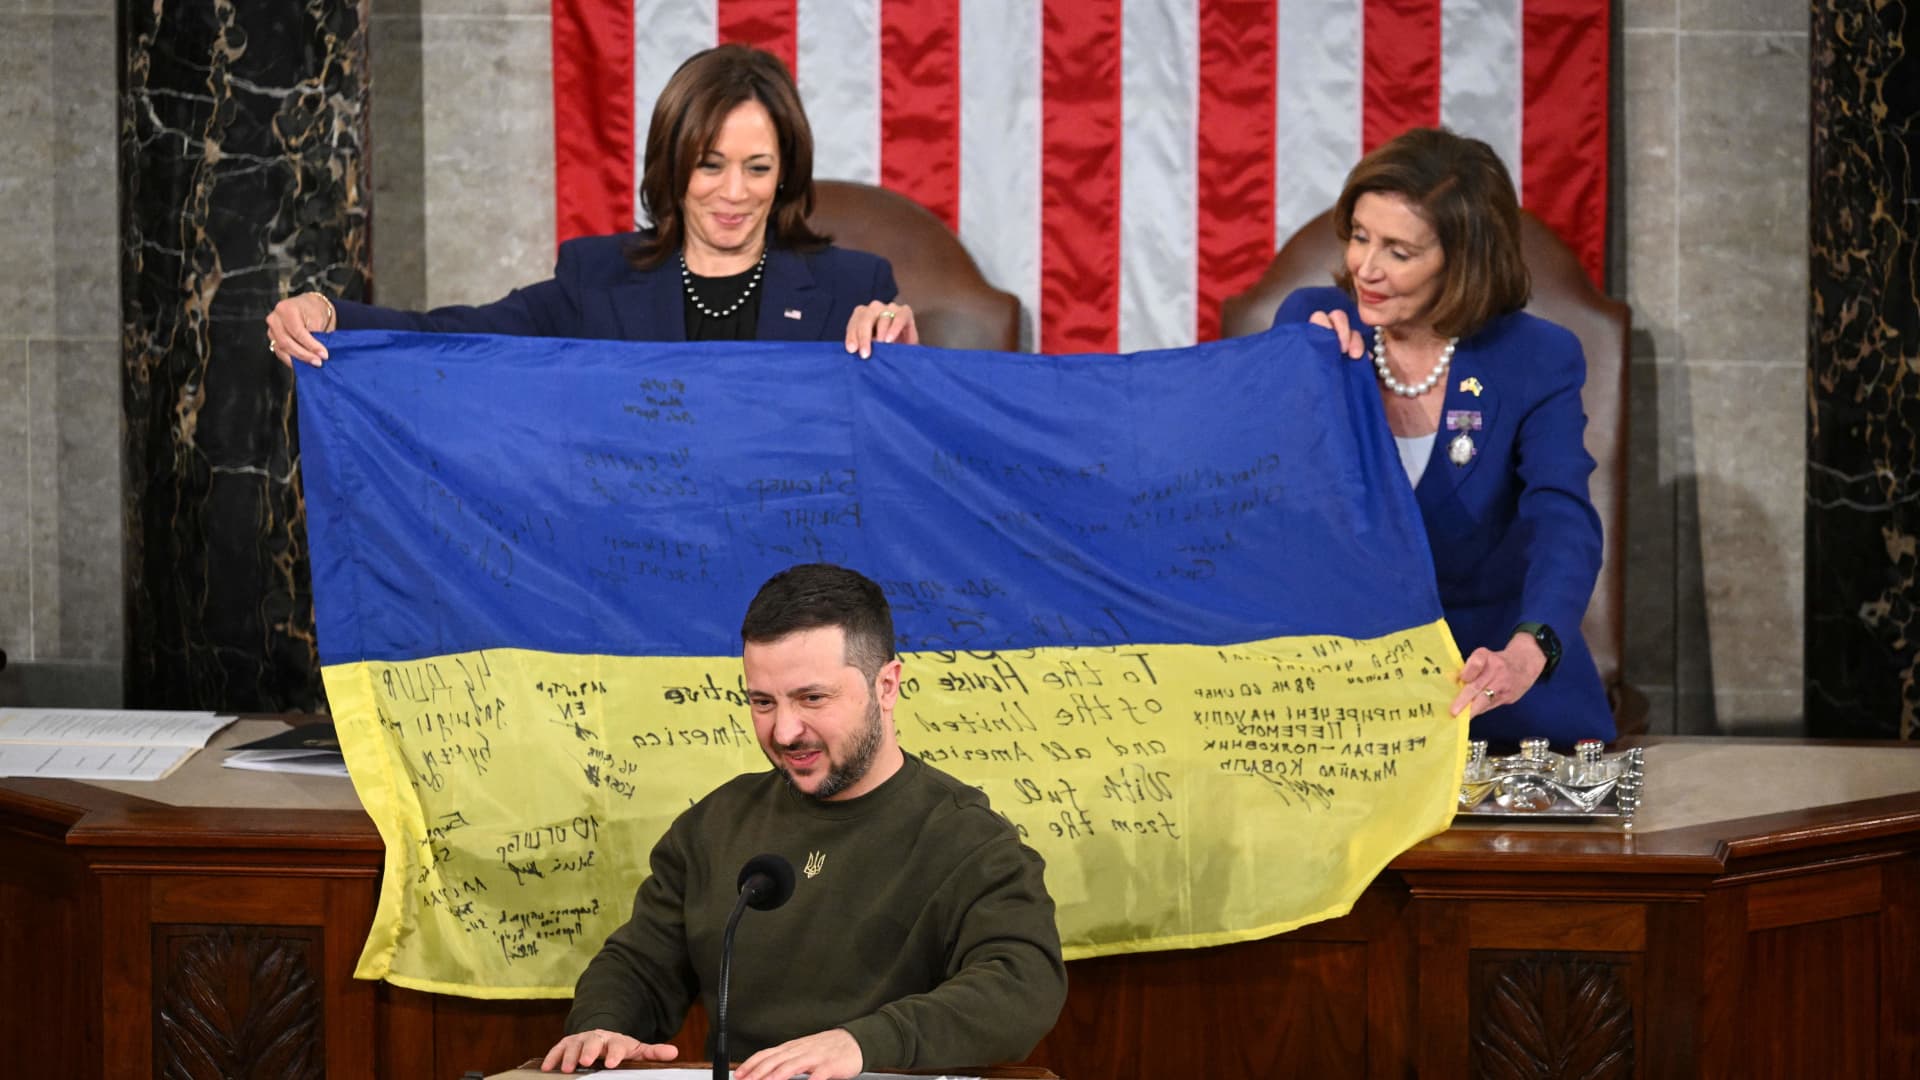 Ukraine's President Volodymyr Zelenskyy addresses the U.S. Congress as U.S. Vice President Kamala Harris (left) and U.S. House Speaker Nancy Pelosi (D-Calif.) hold a Ukrainian national flag at the U.S. Capitol in Washington, D.C. on Dec. 21, 2022.